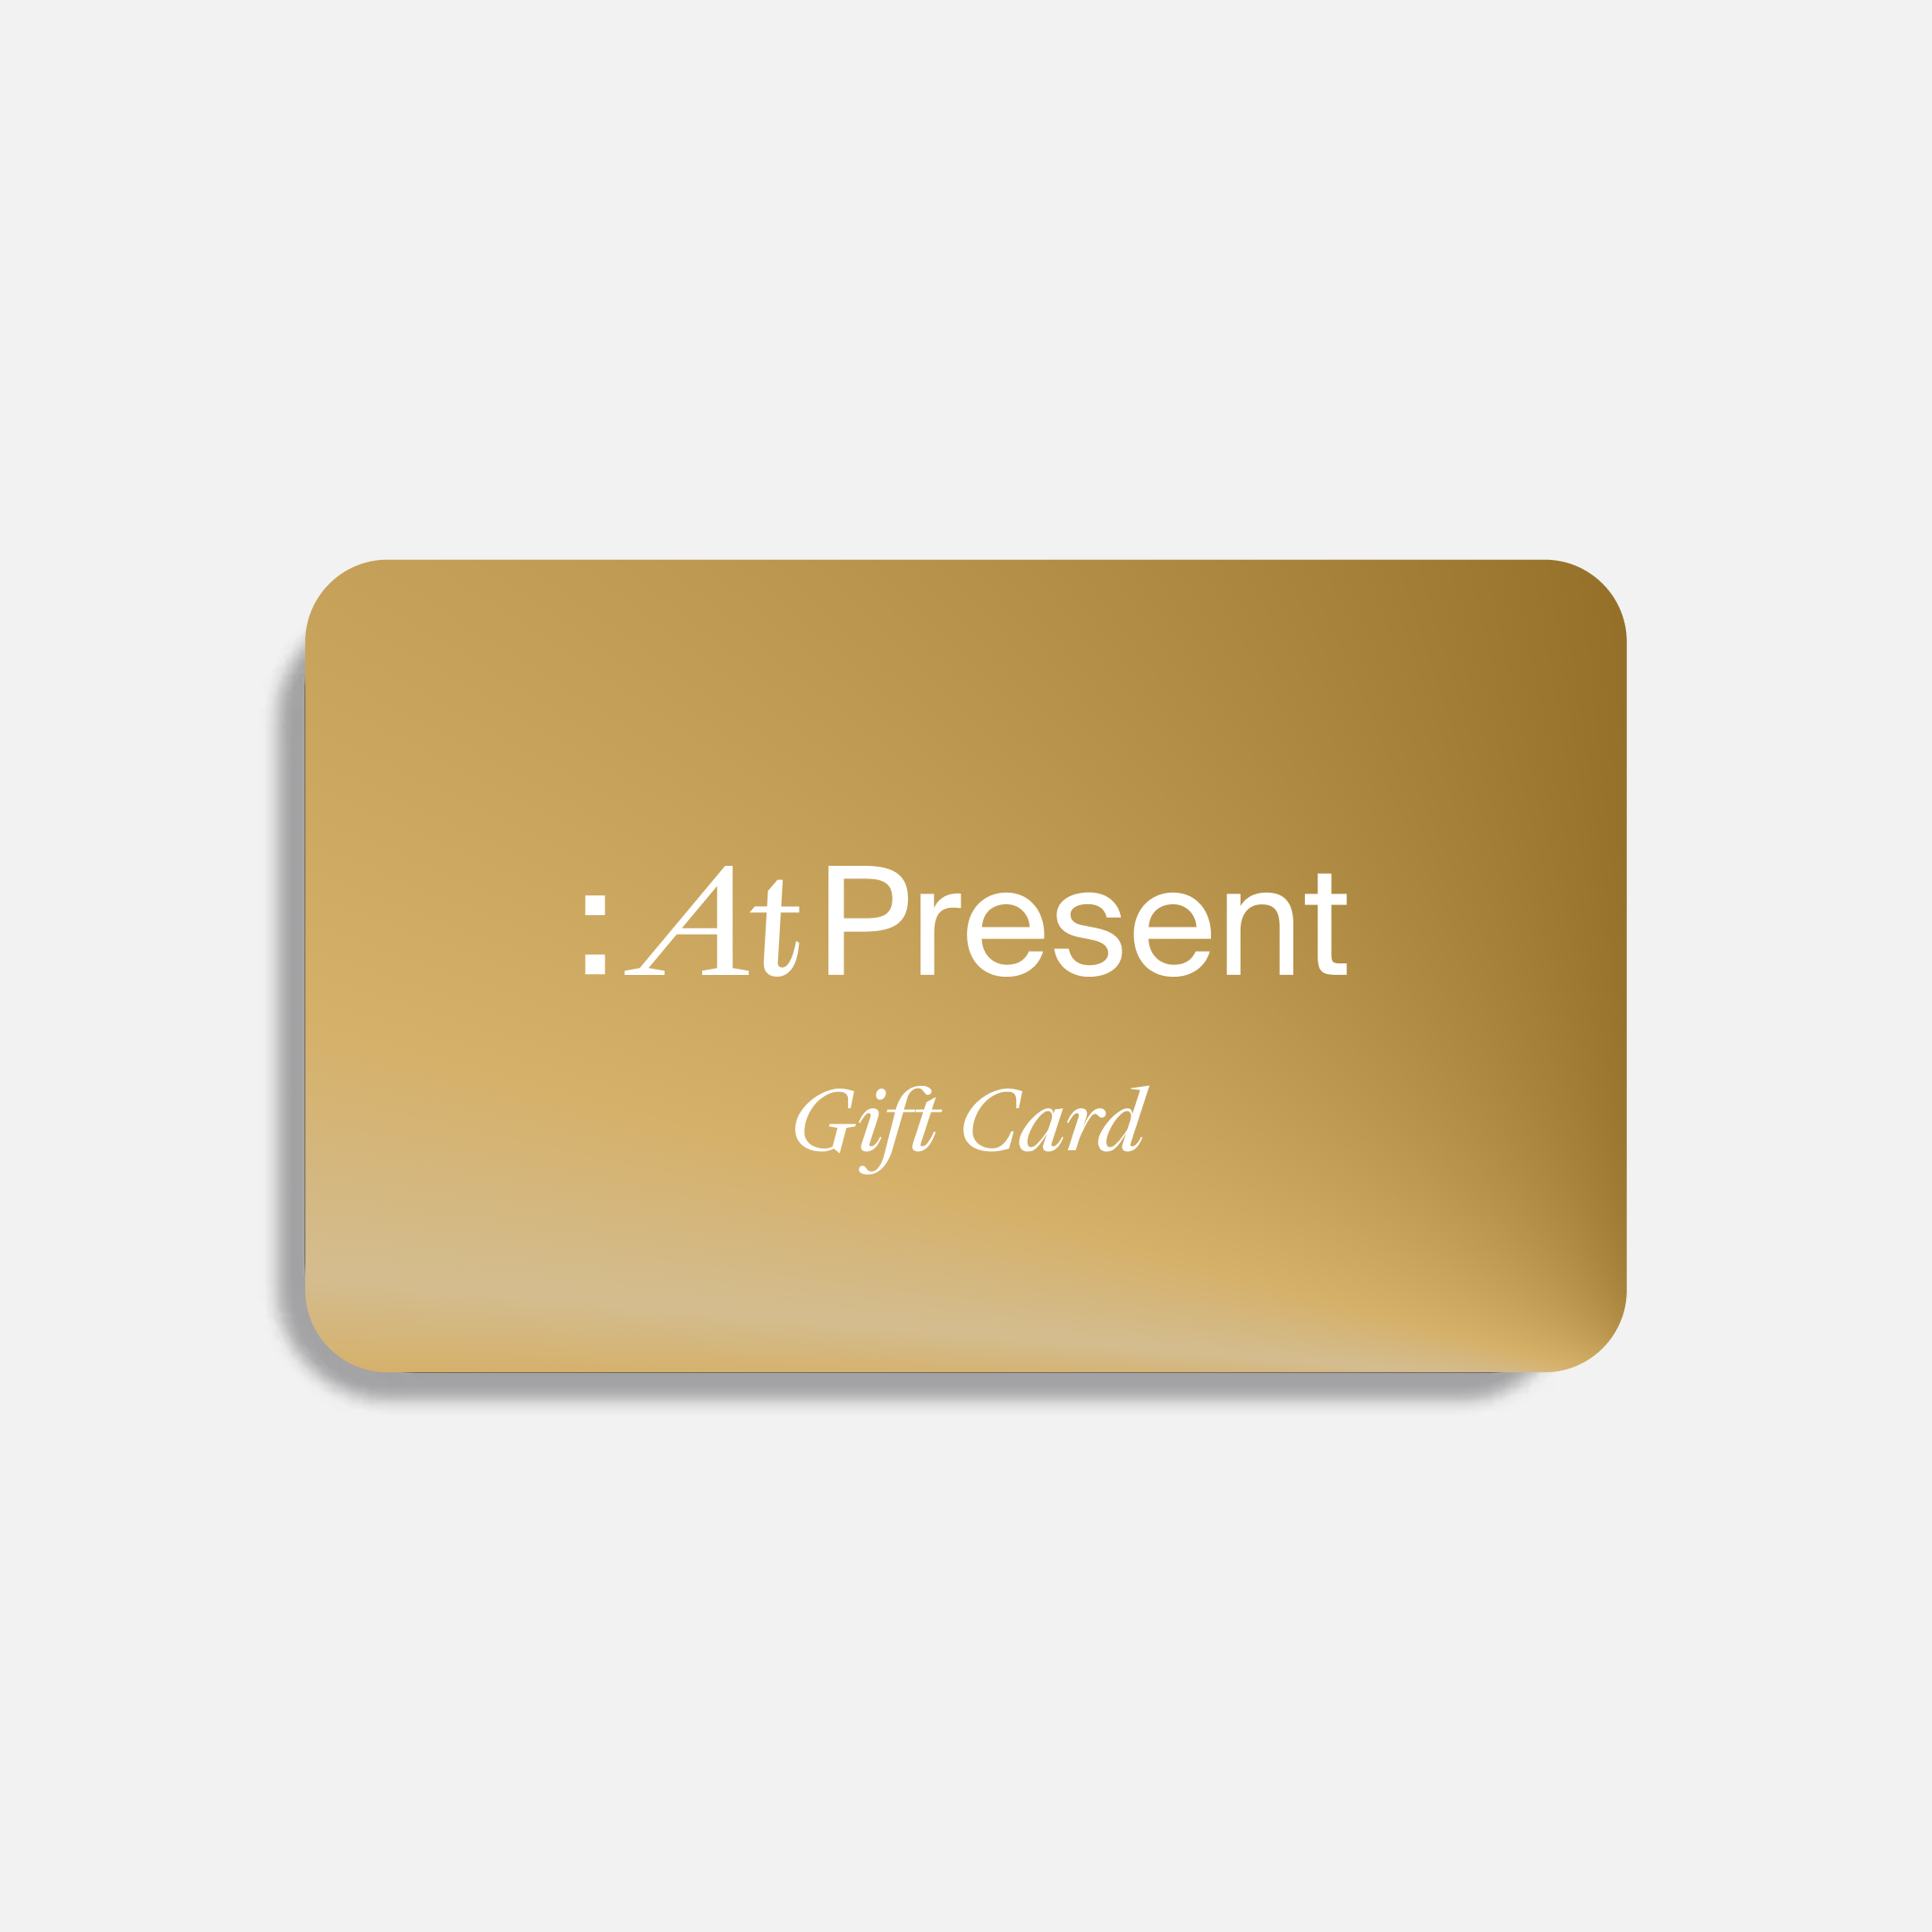 At Present Gift Card